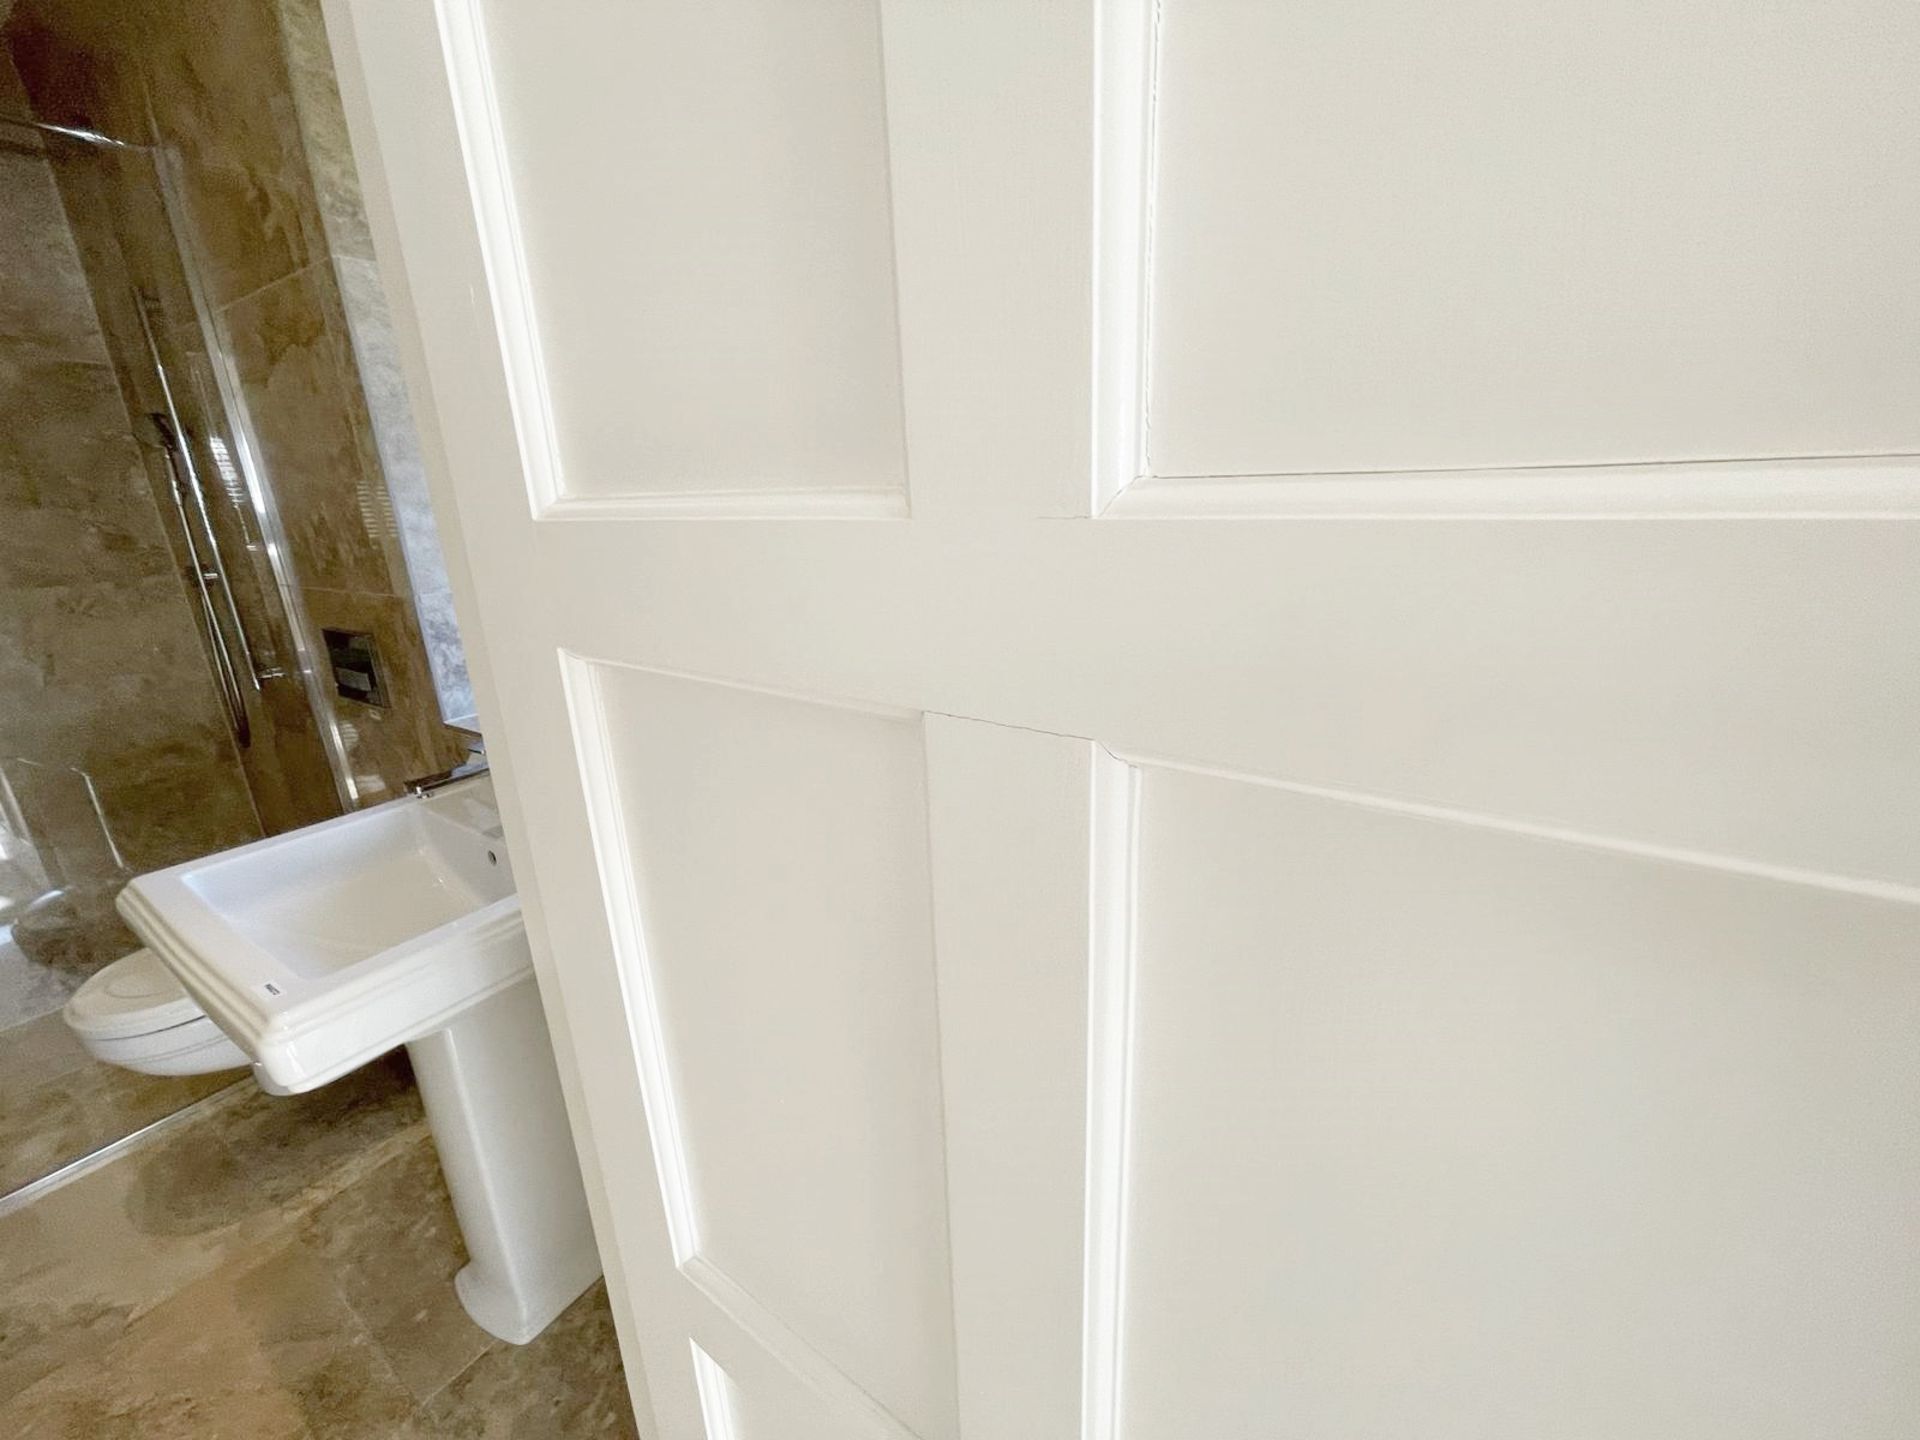 1 x Solid Wood Lockable Painted Internal Bathroom Door in White - Includes Handles and Hinges - Ref: - Image 9 of 17